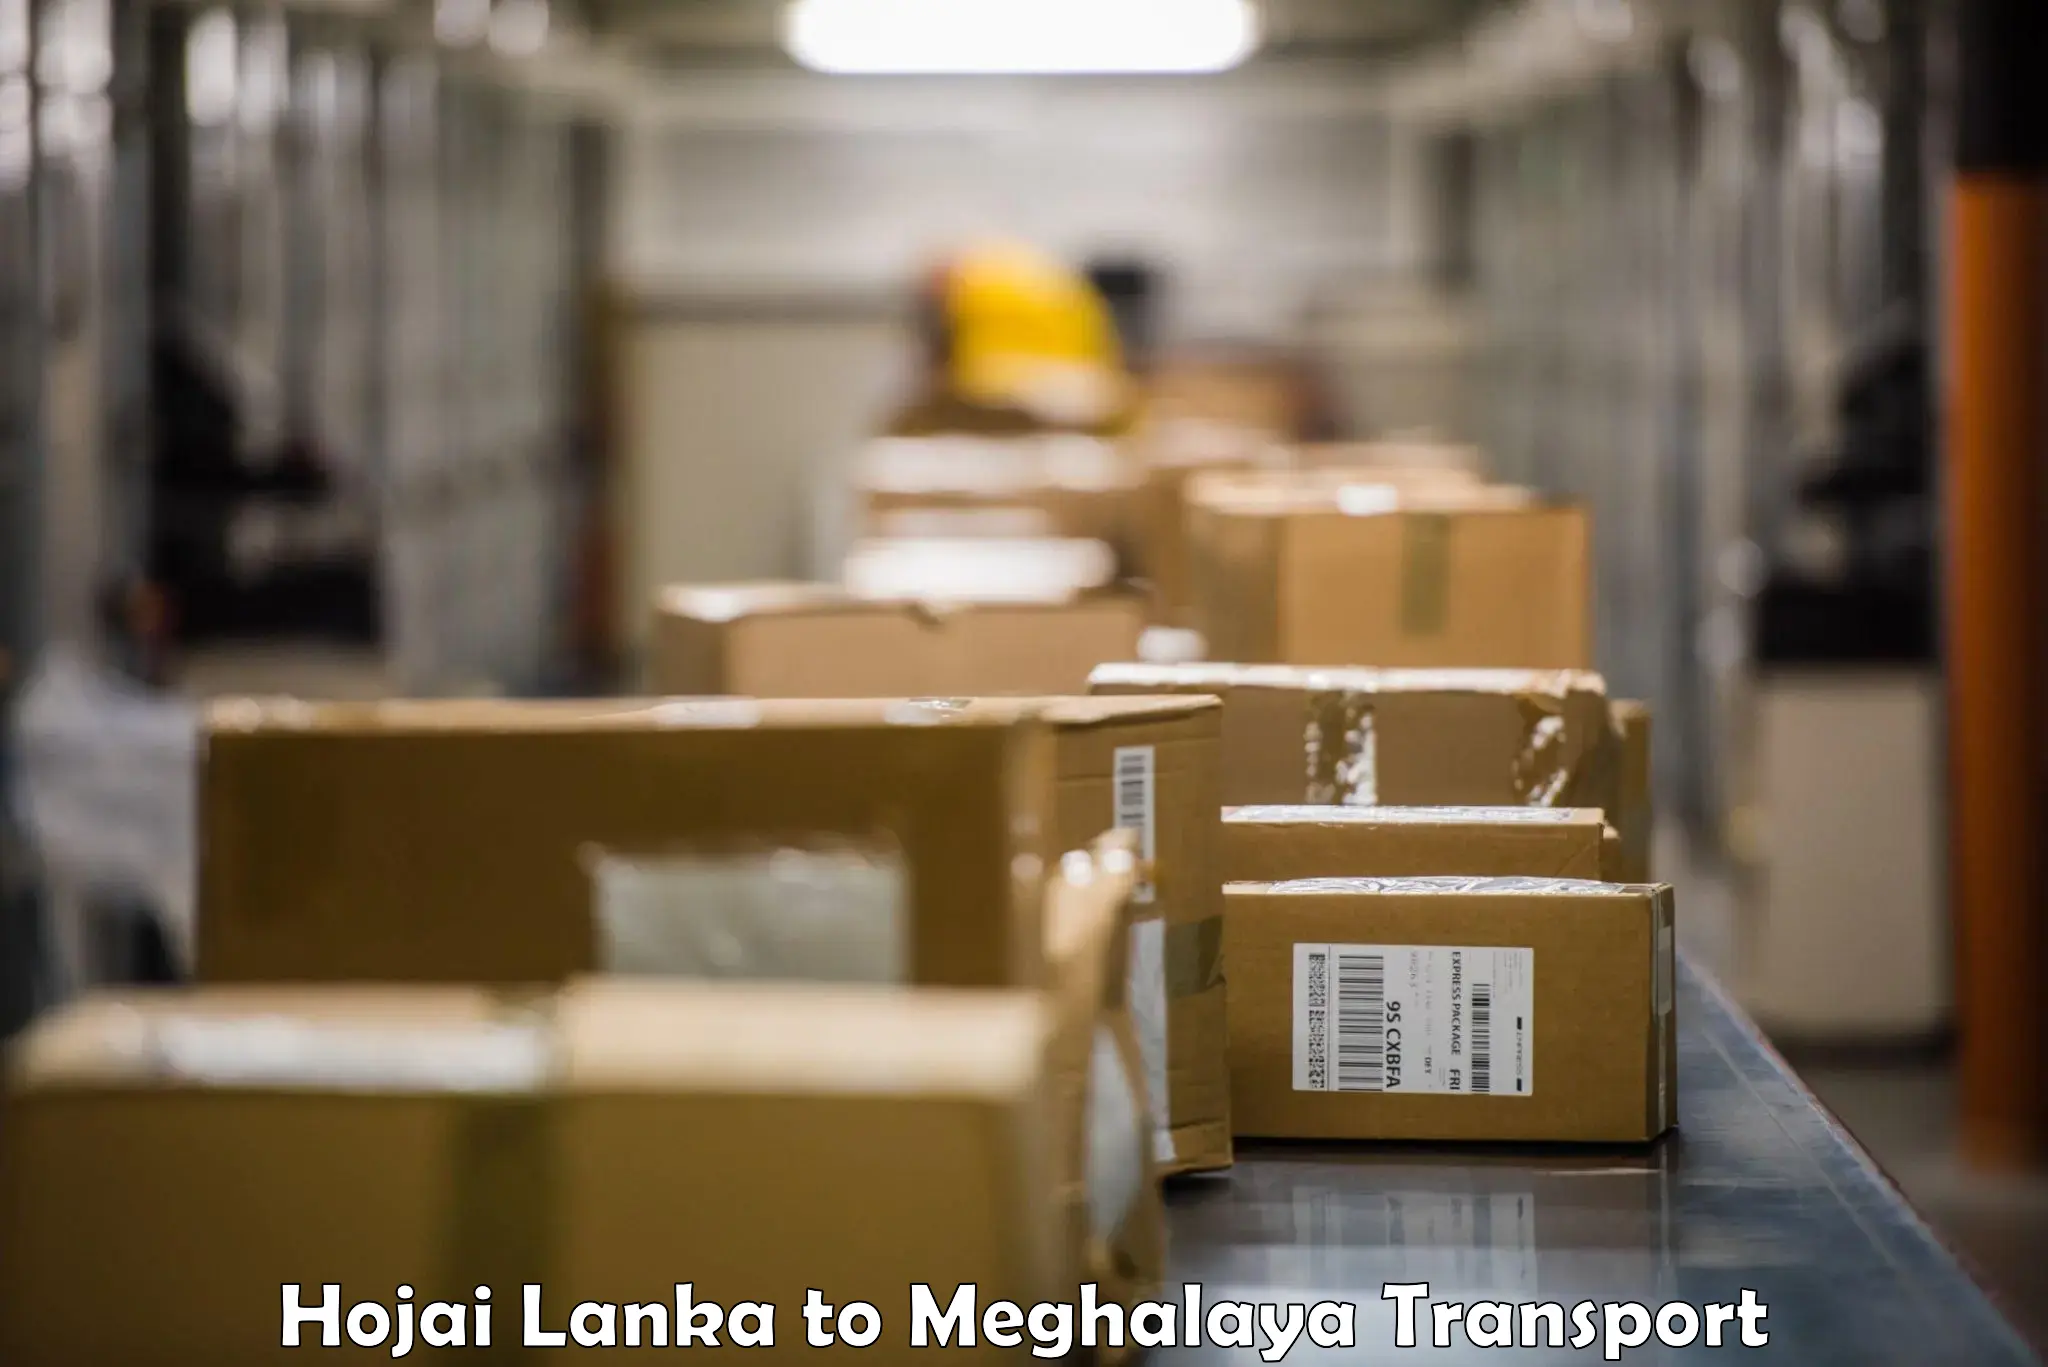 Truck transport companies in India Hojai Lanka to Tura